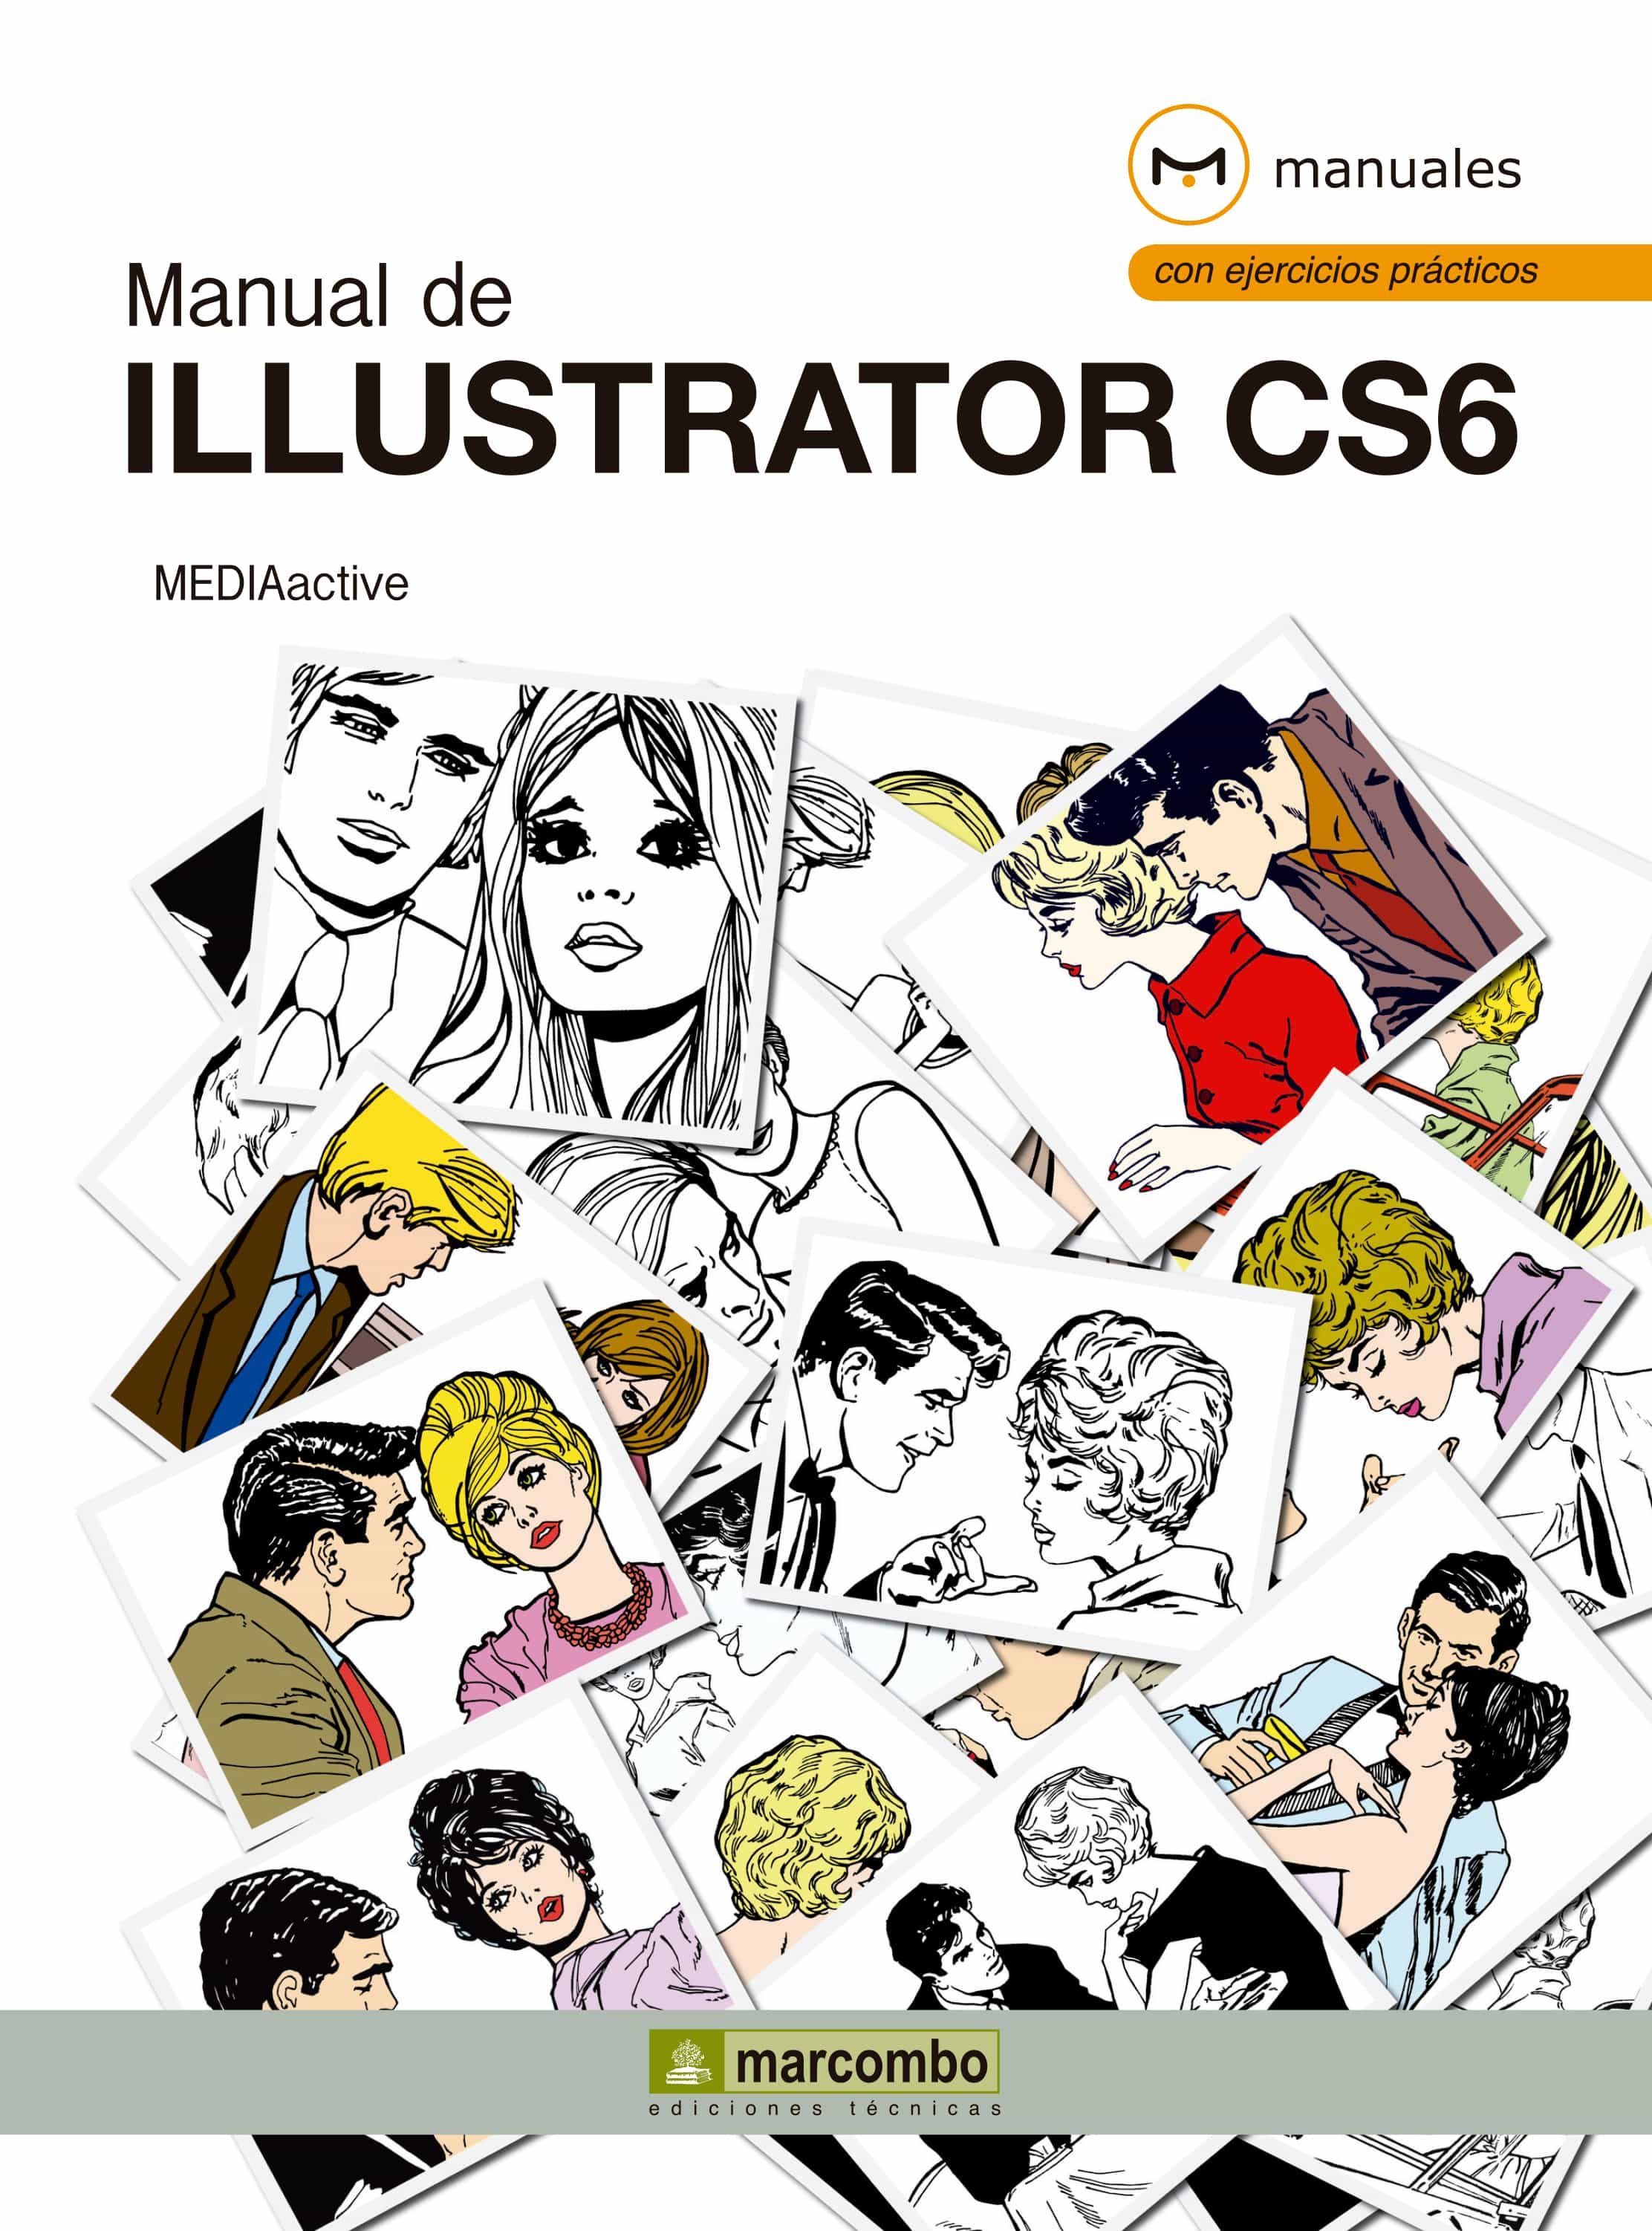 illustrator cs6 ebook download